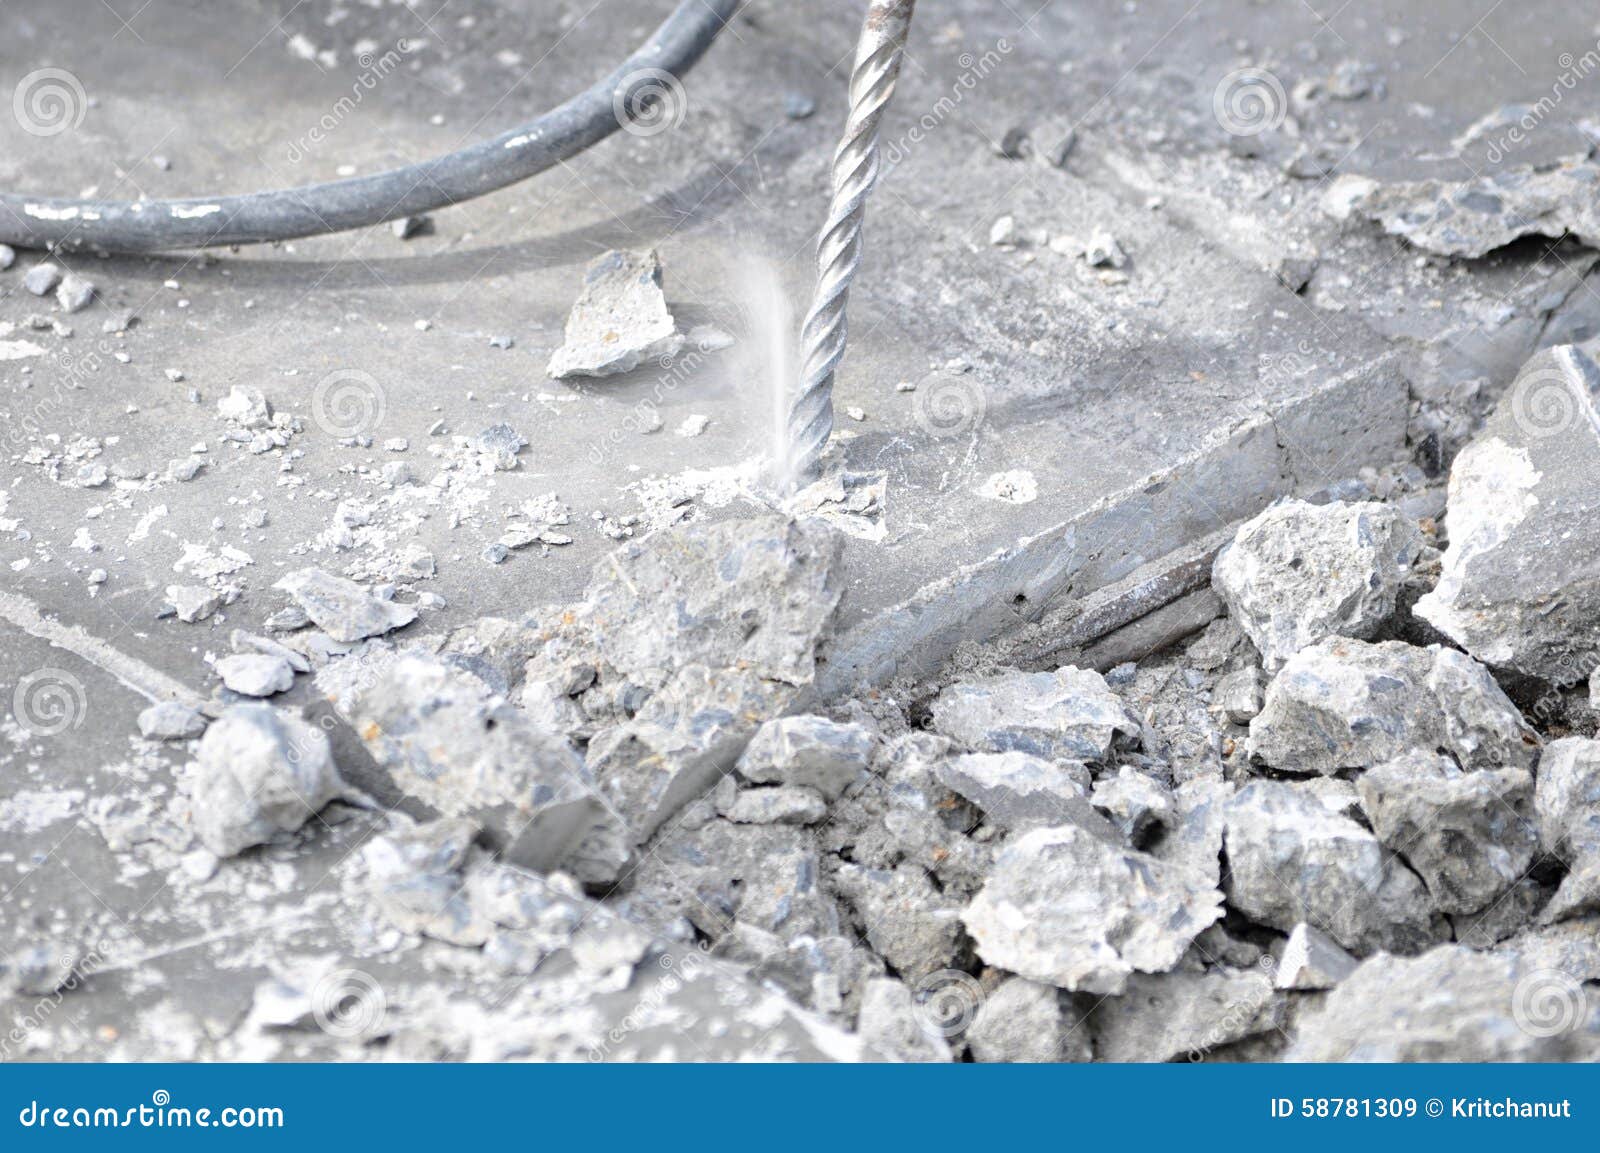 Drilling Machine Breaking Concrete Floor Stock Image Image Of